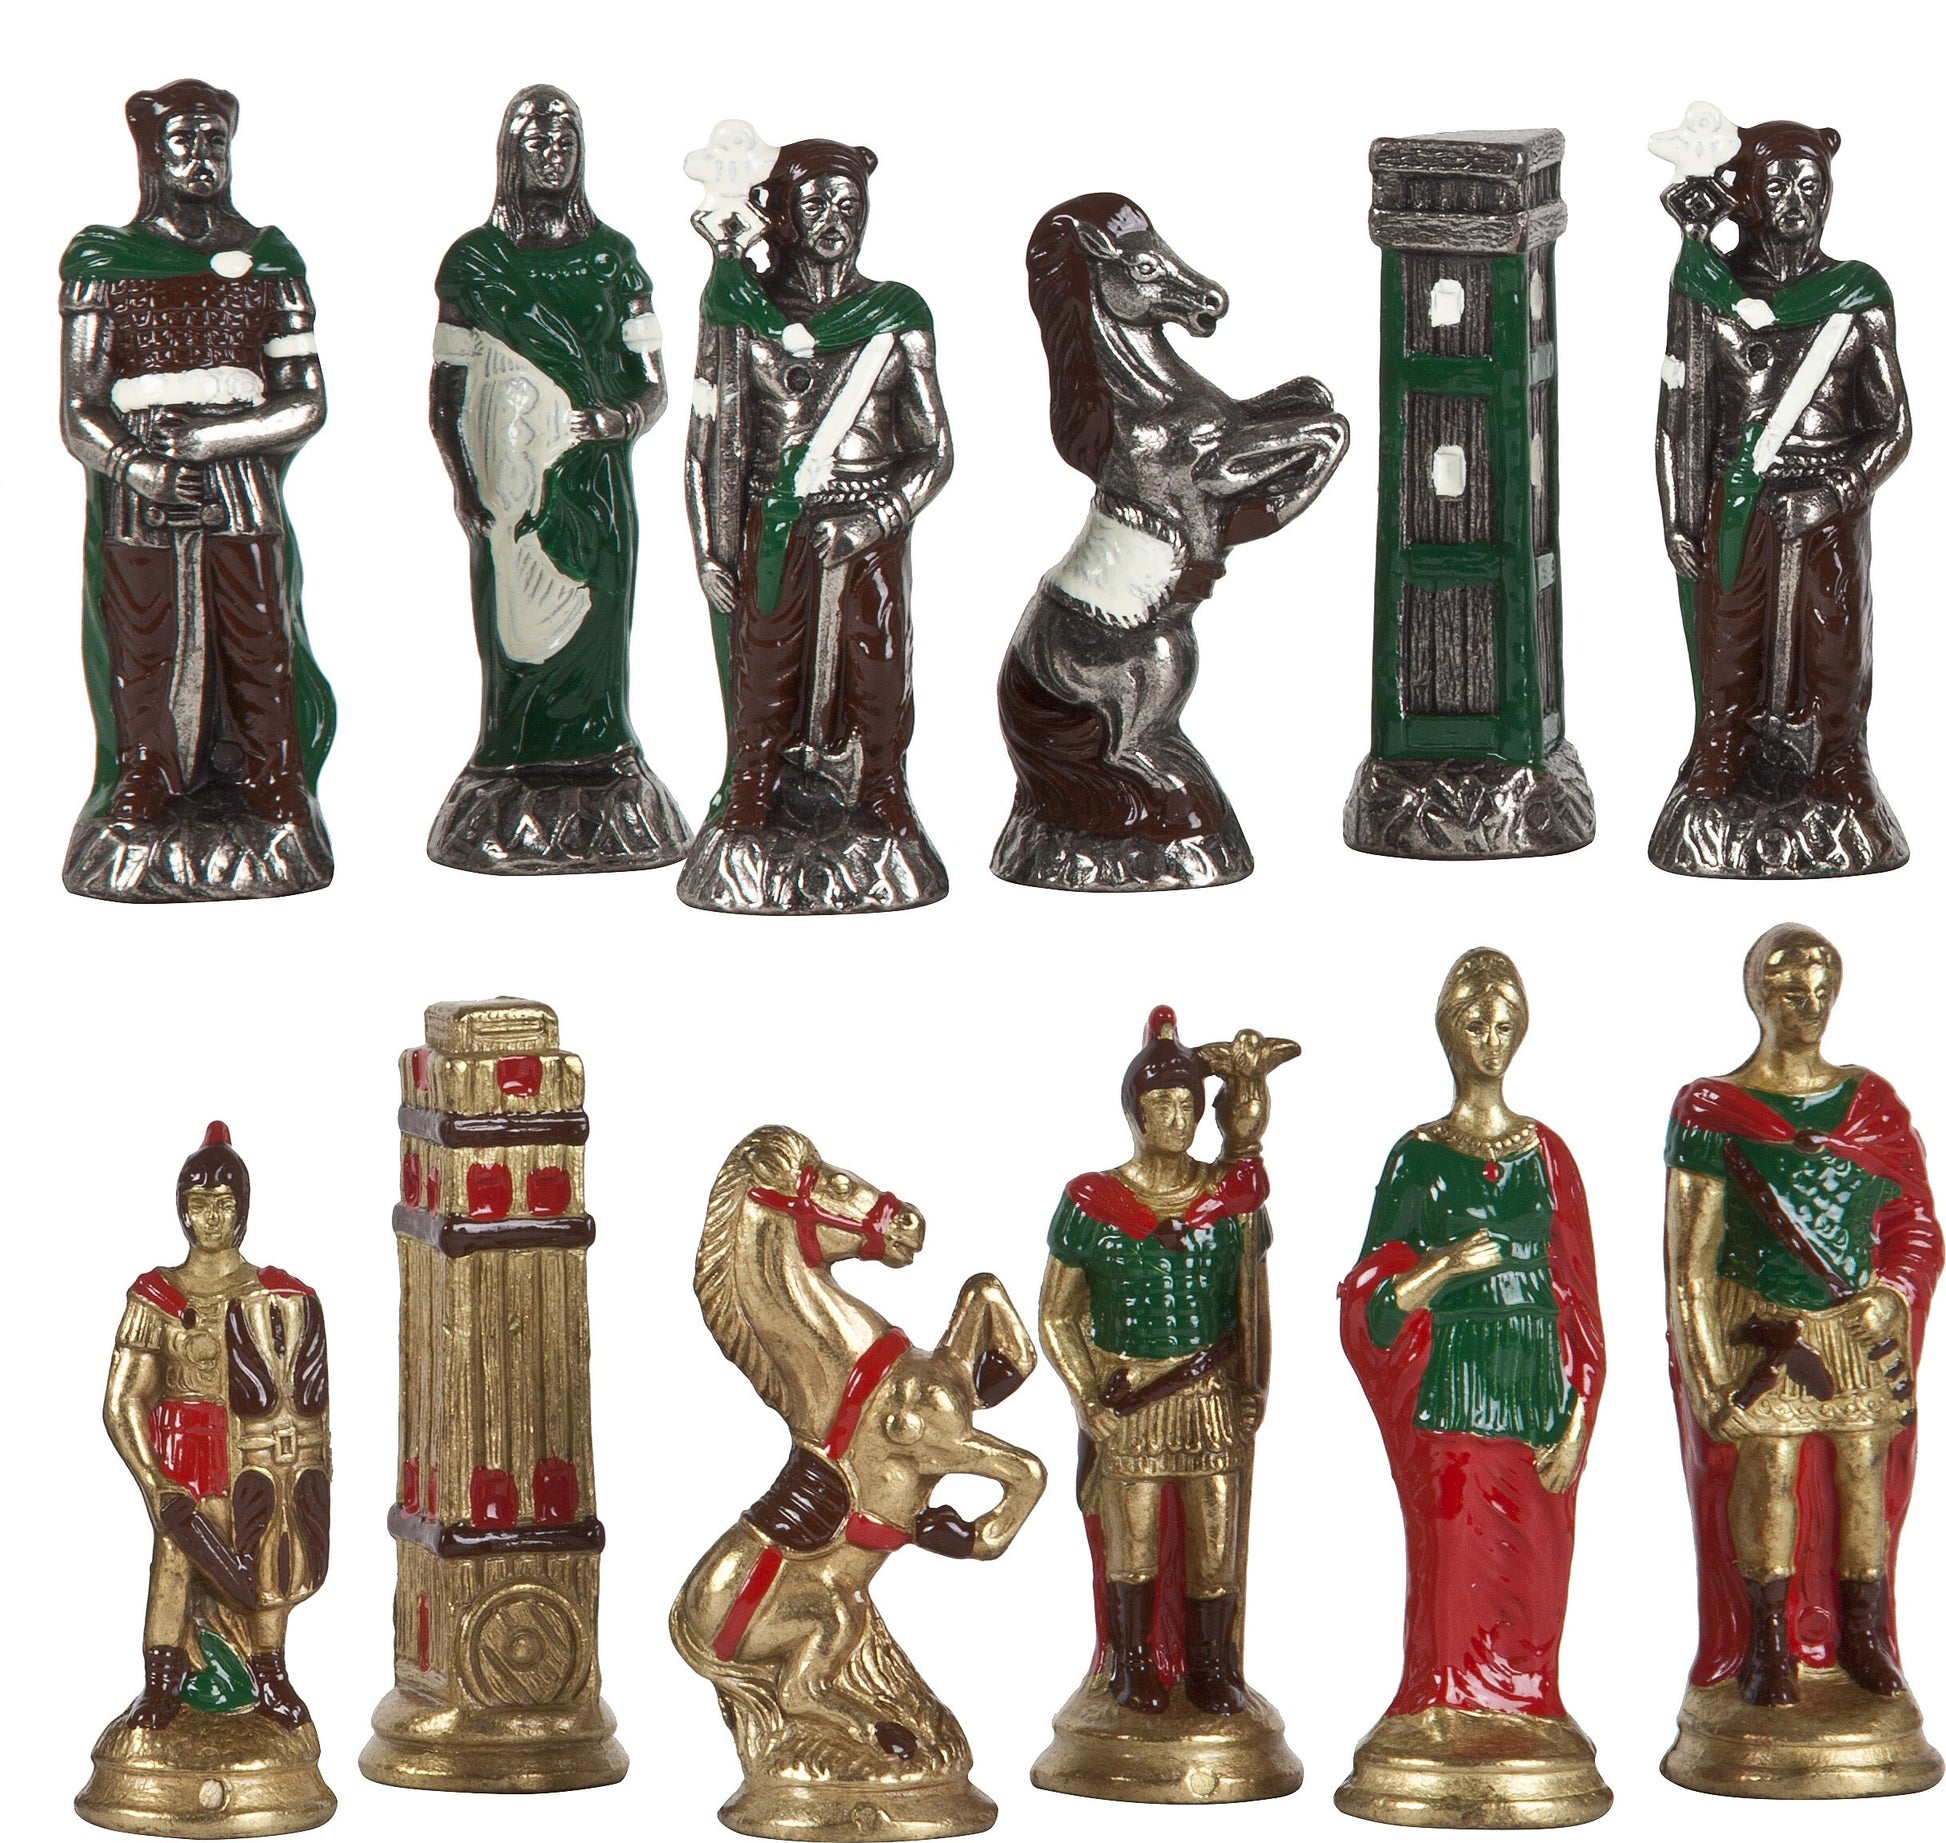 Painted Brass Romans vs Barbarians Themed Chessmen